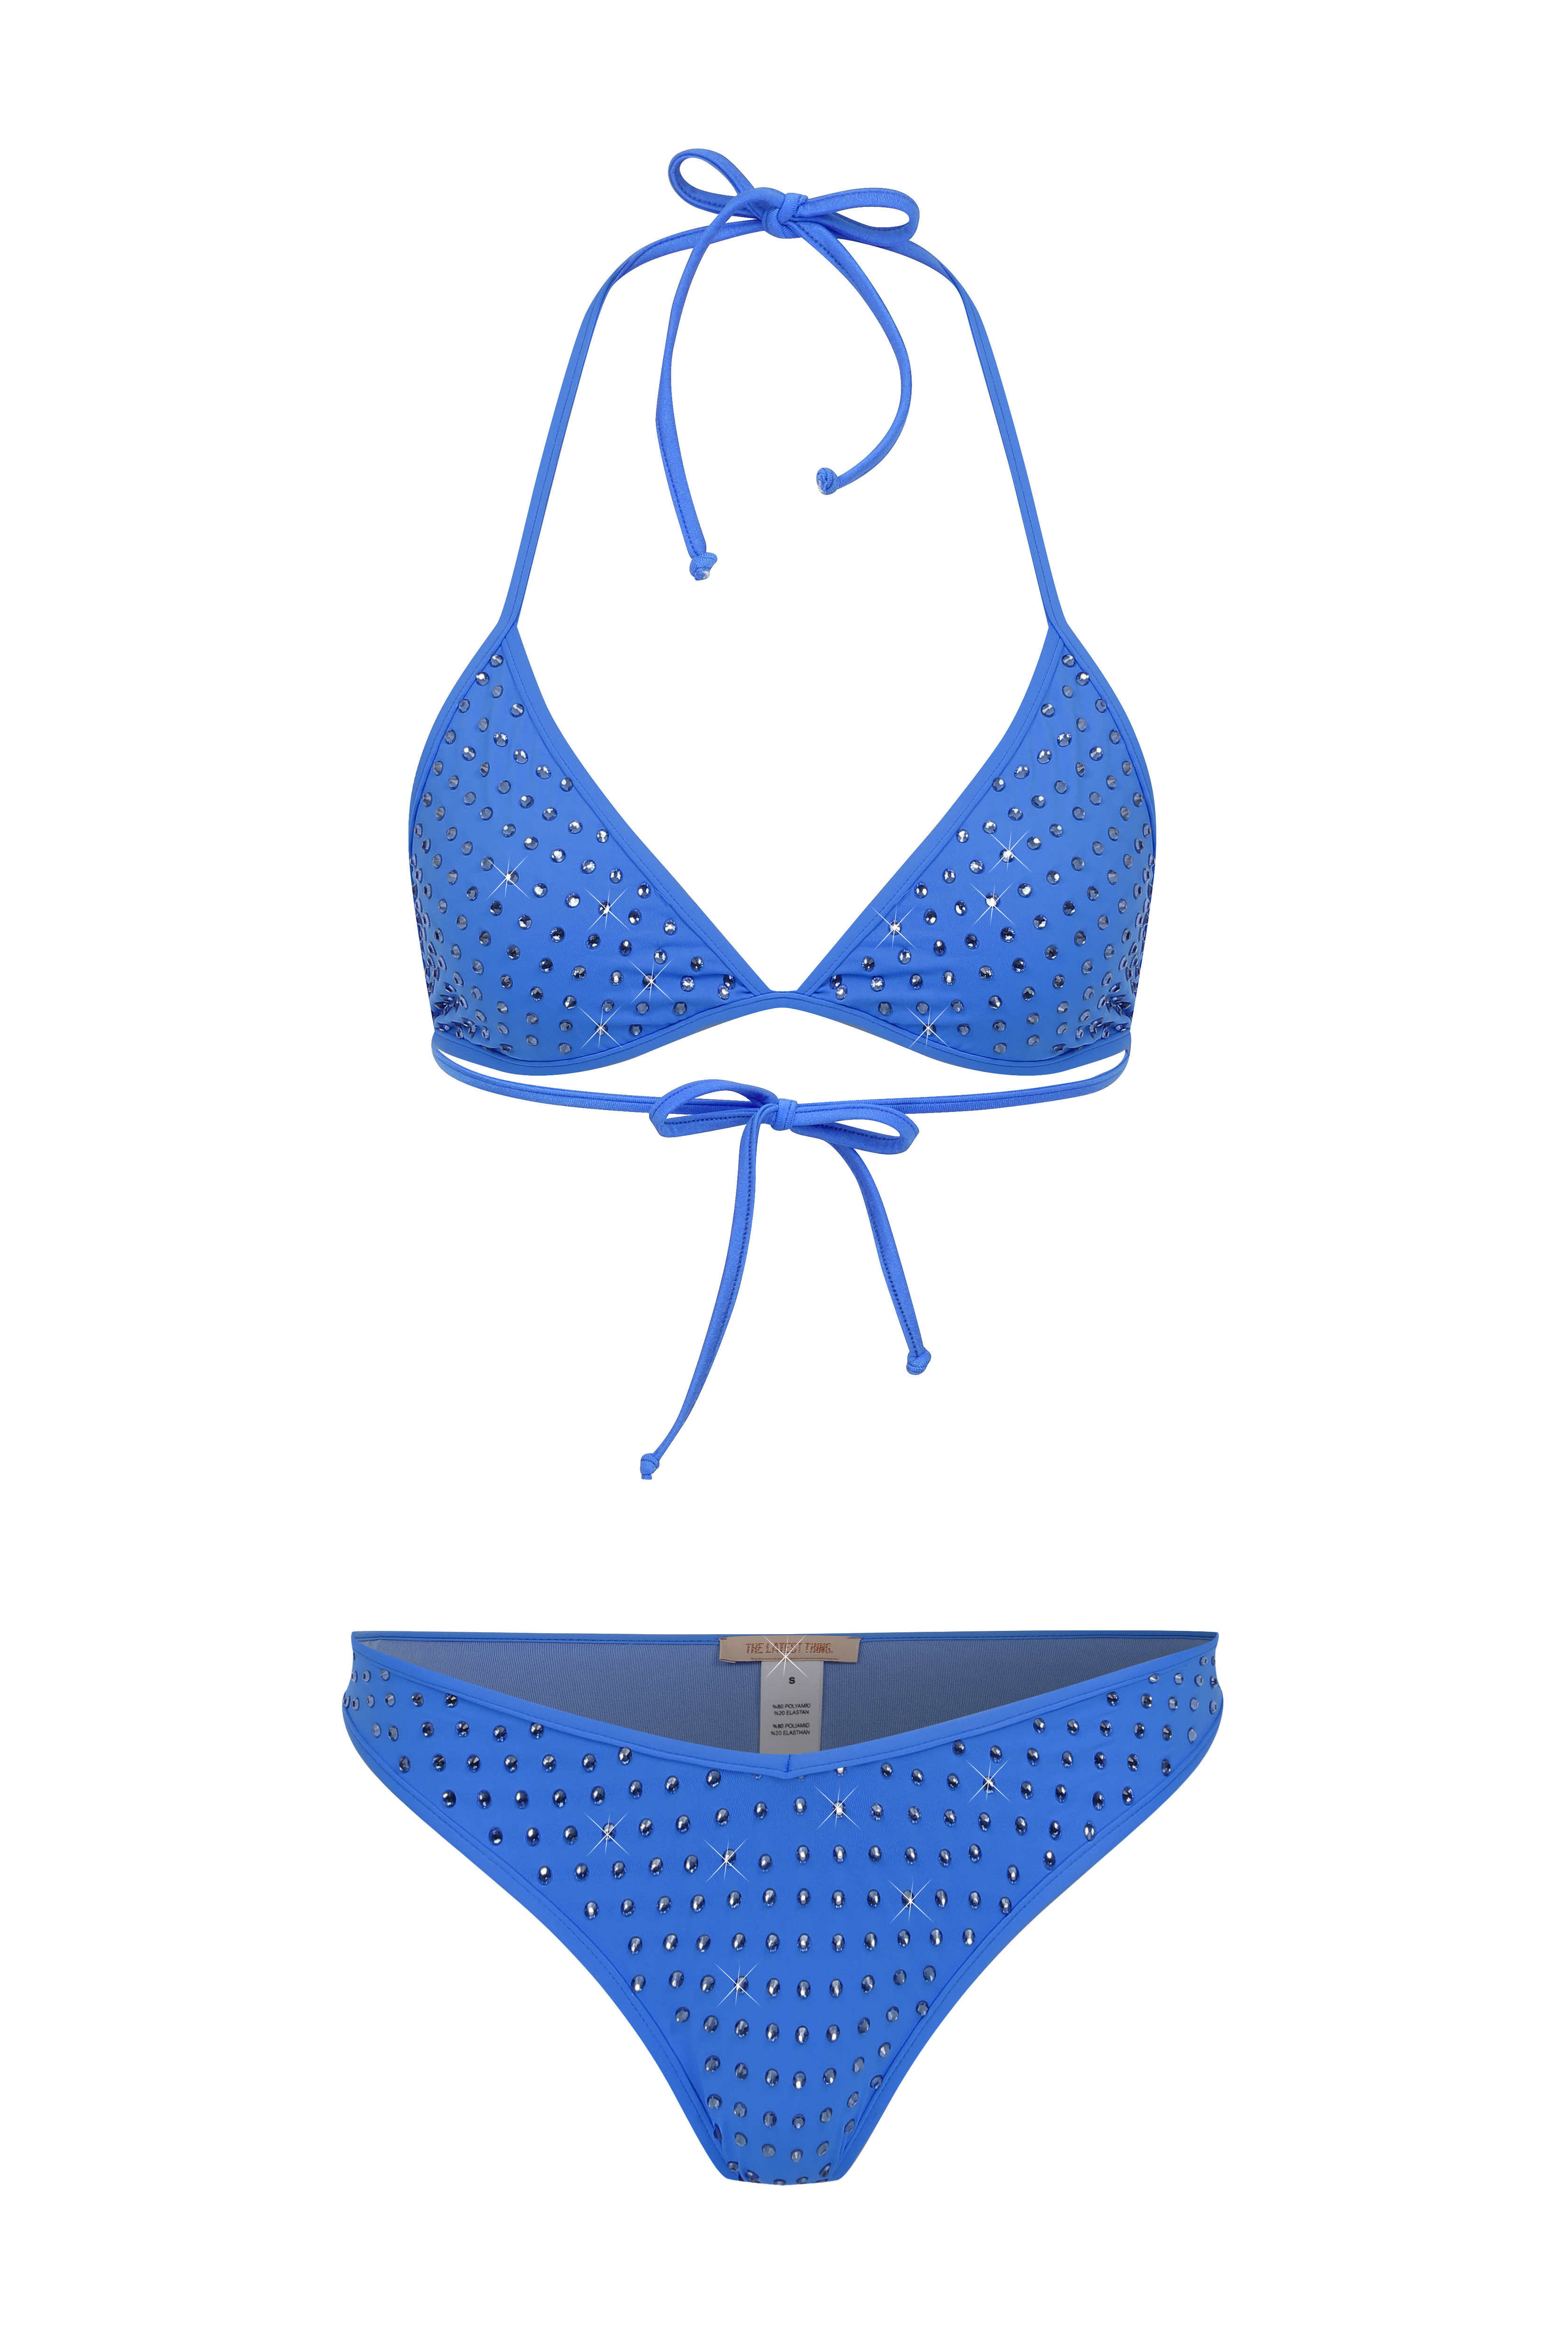 SHINY Stone Printed Blue Bikini Set